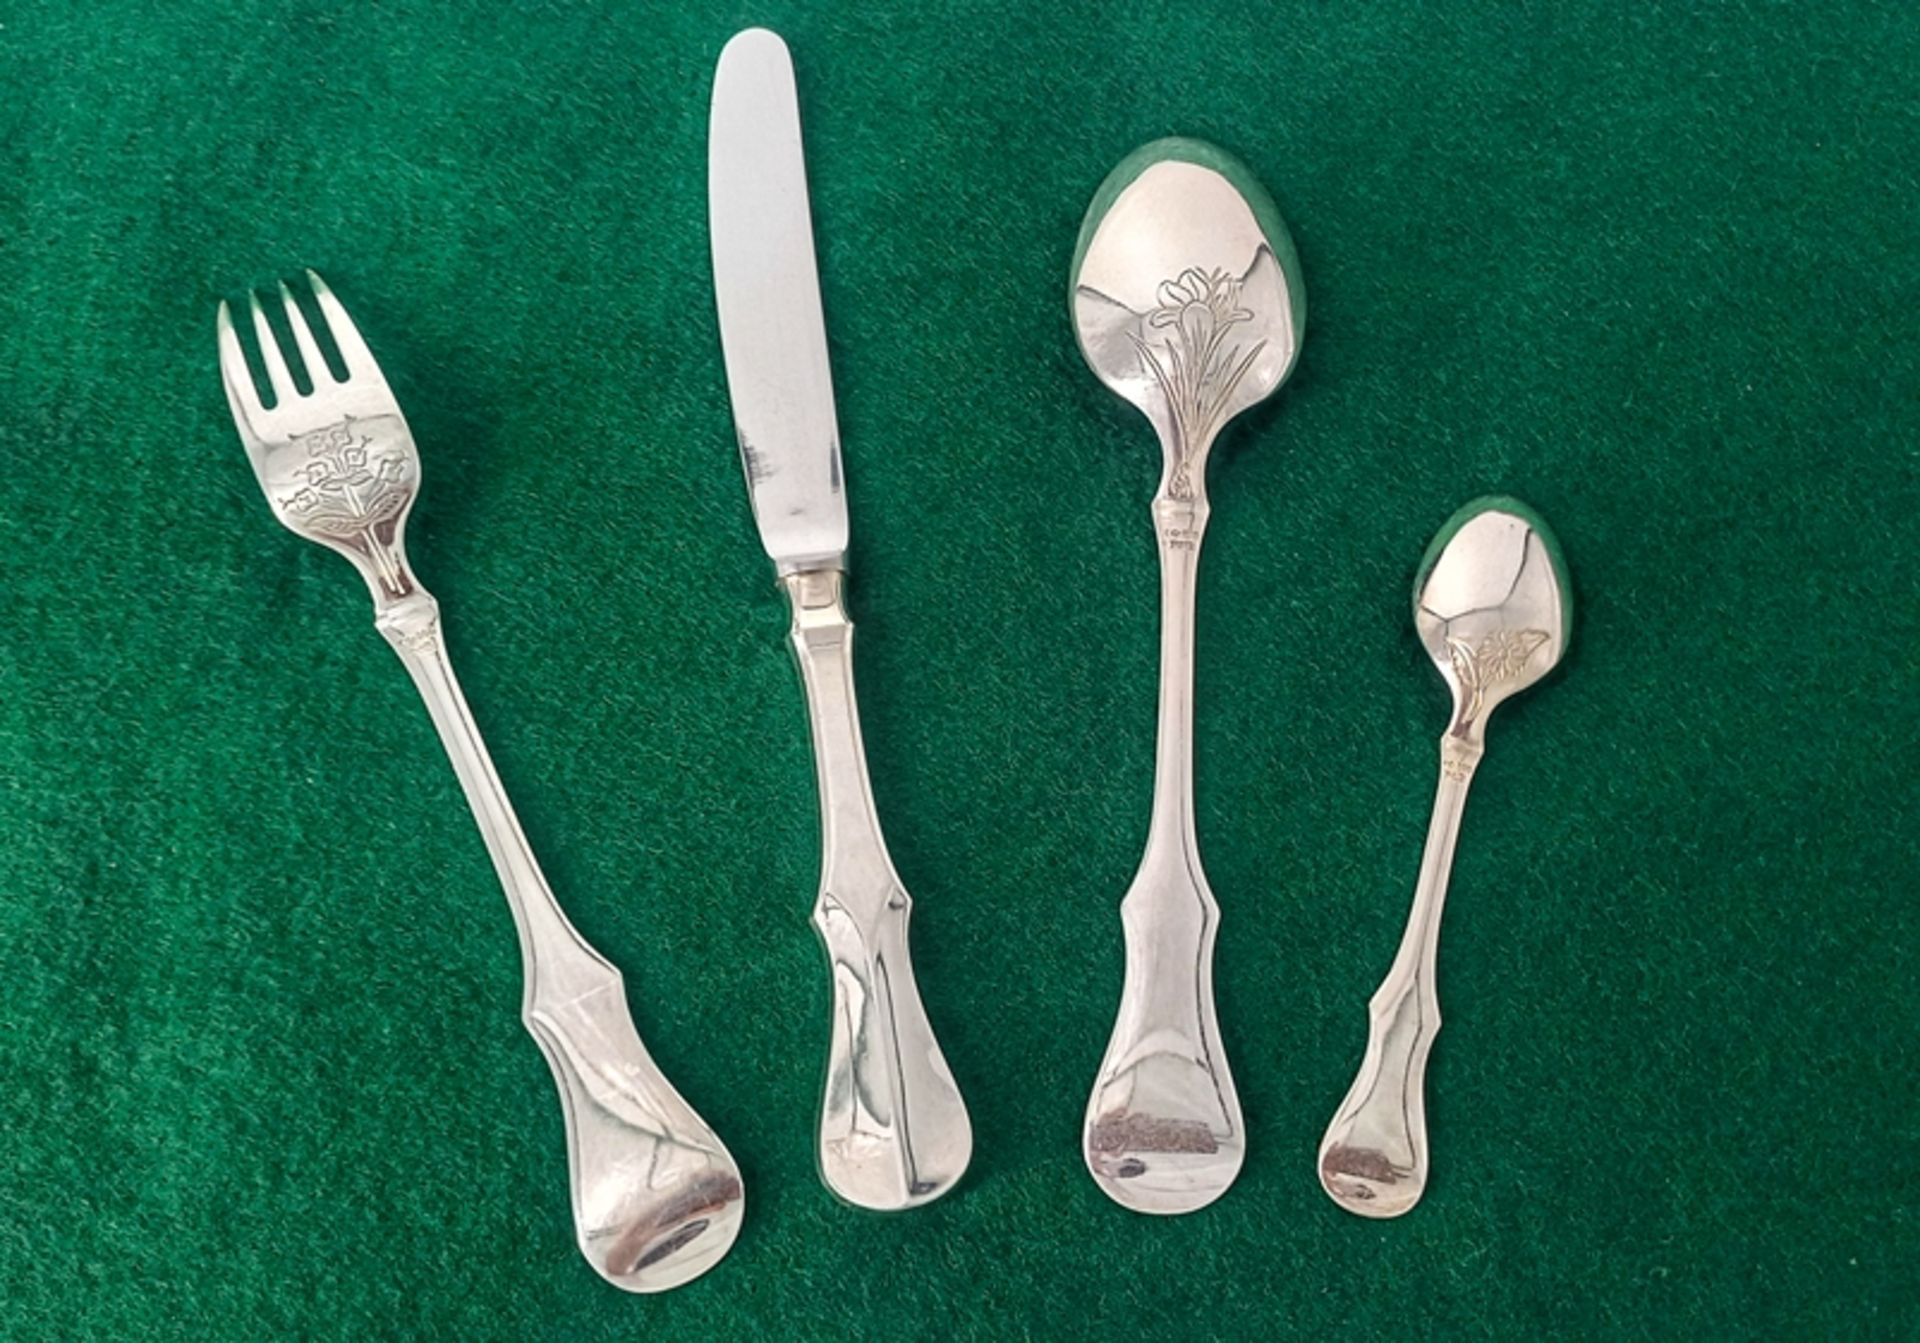 6 person cutlery set in 800 silver Robbe & Berking "Old Copenhagen" 24 pieces - Image 2 of 4